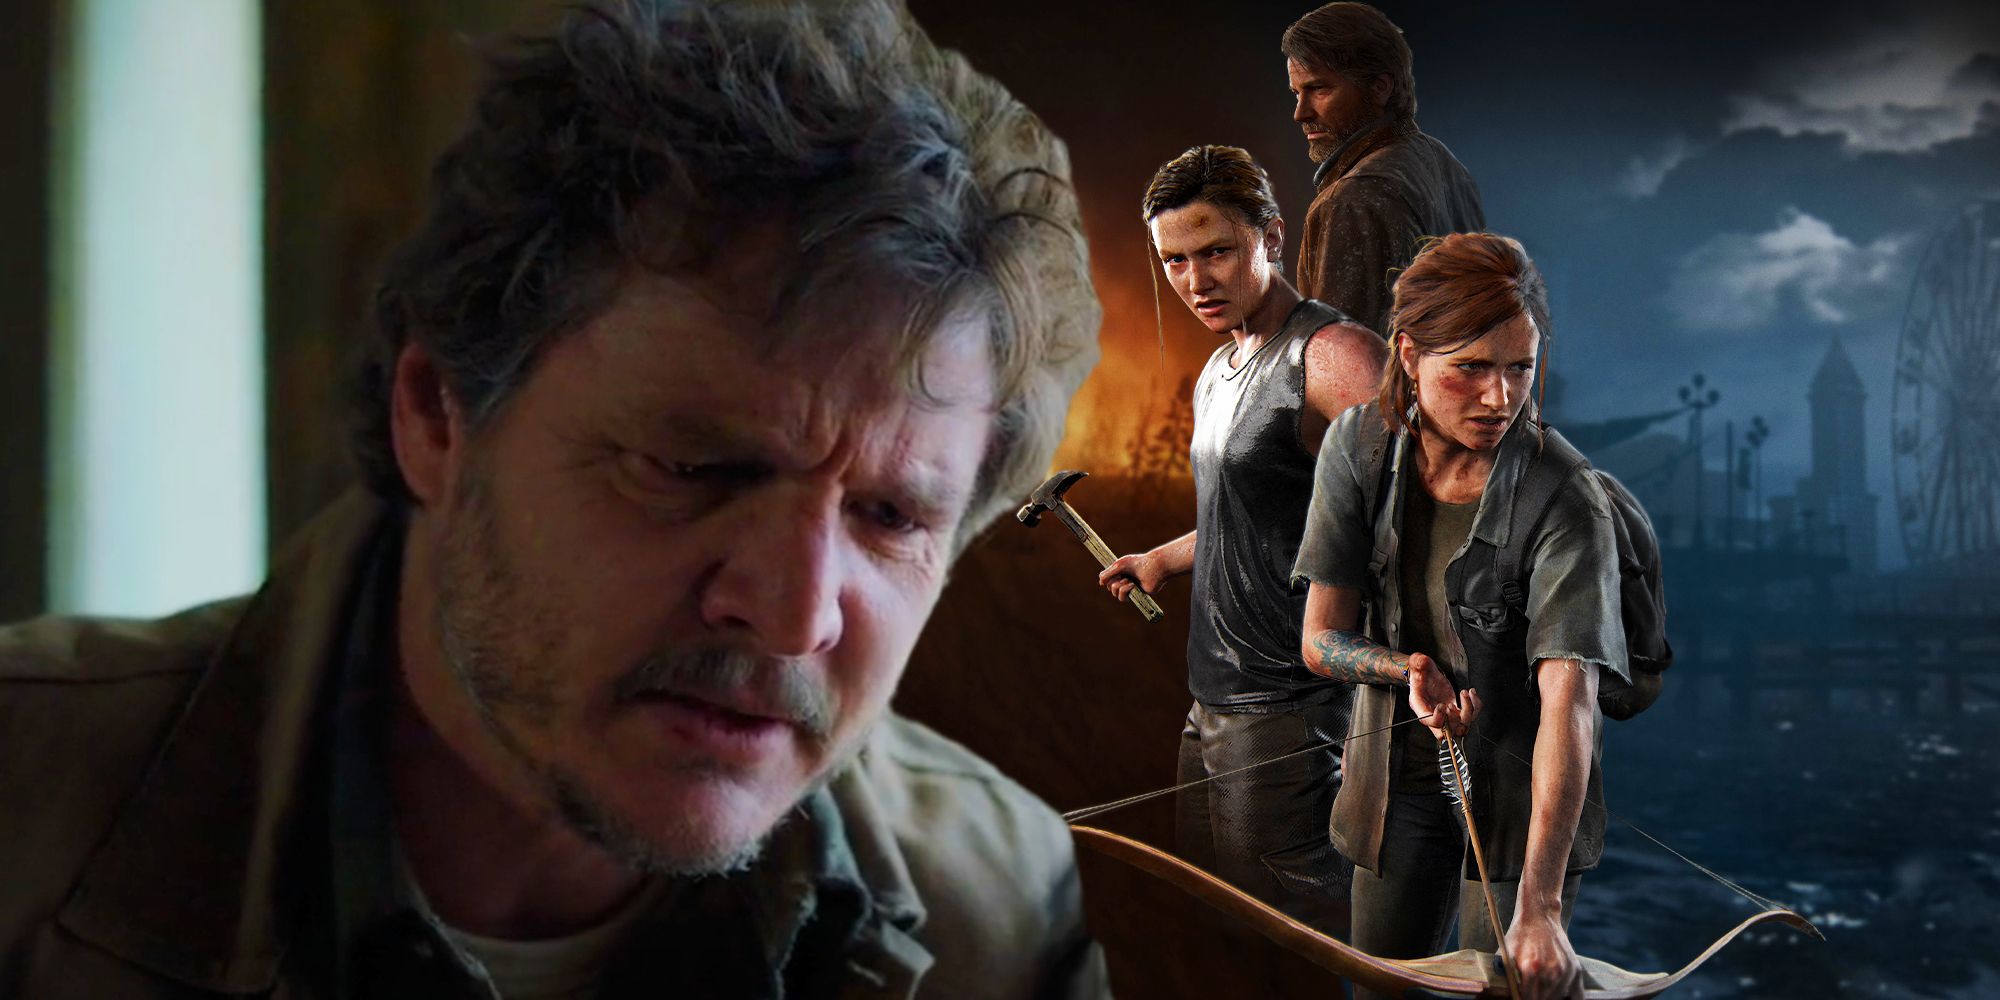 The Last of Us' Episode 8 Breakdown: Role Reversal, Joel Traversal - The  Ringer